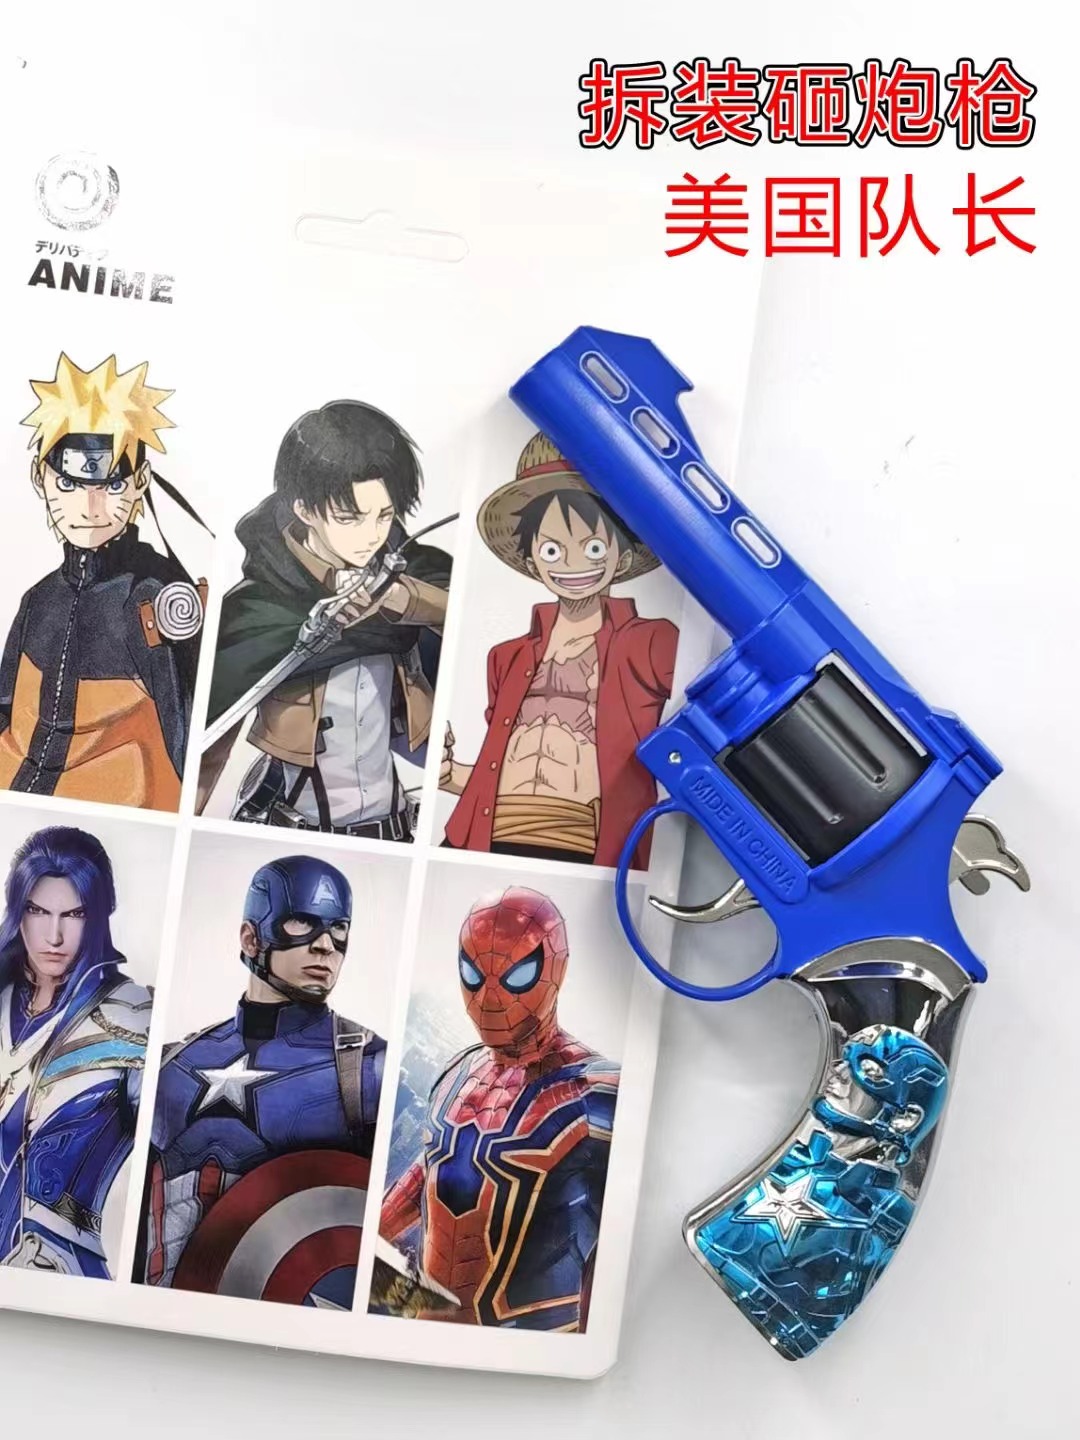 Avengers anime assembly of cannon smashing gun toys